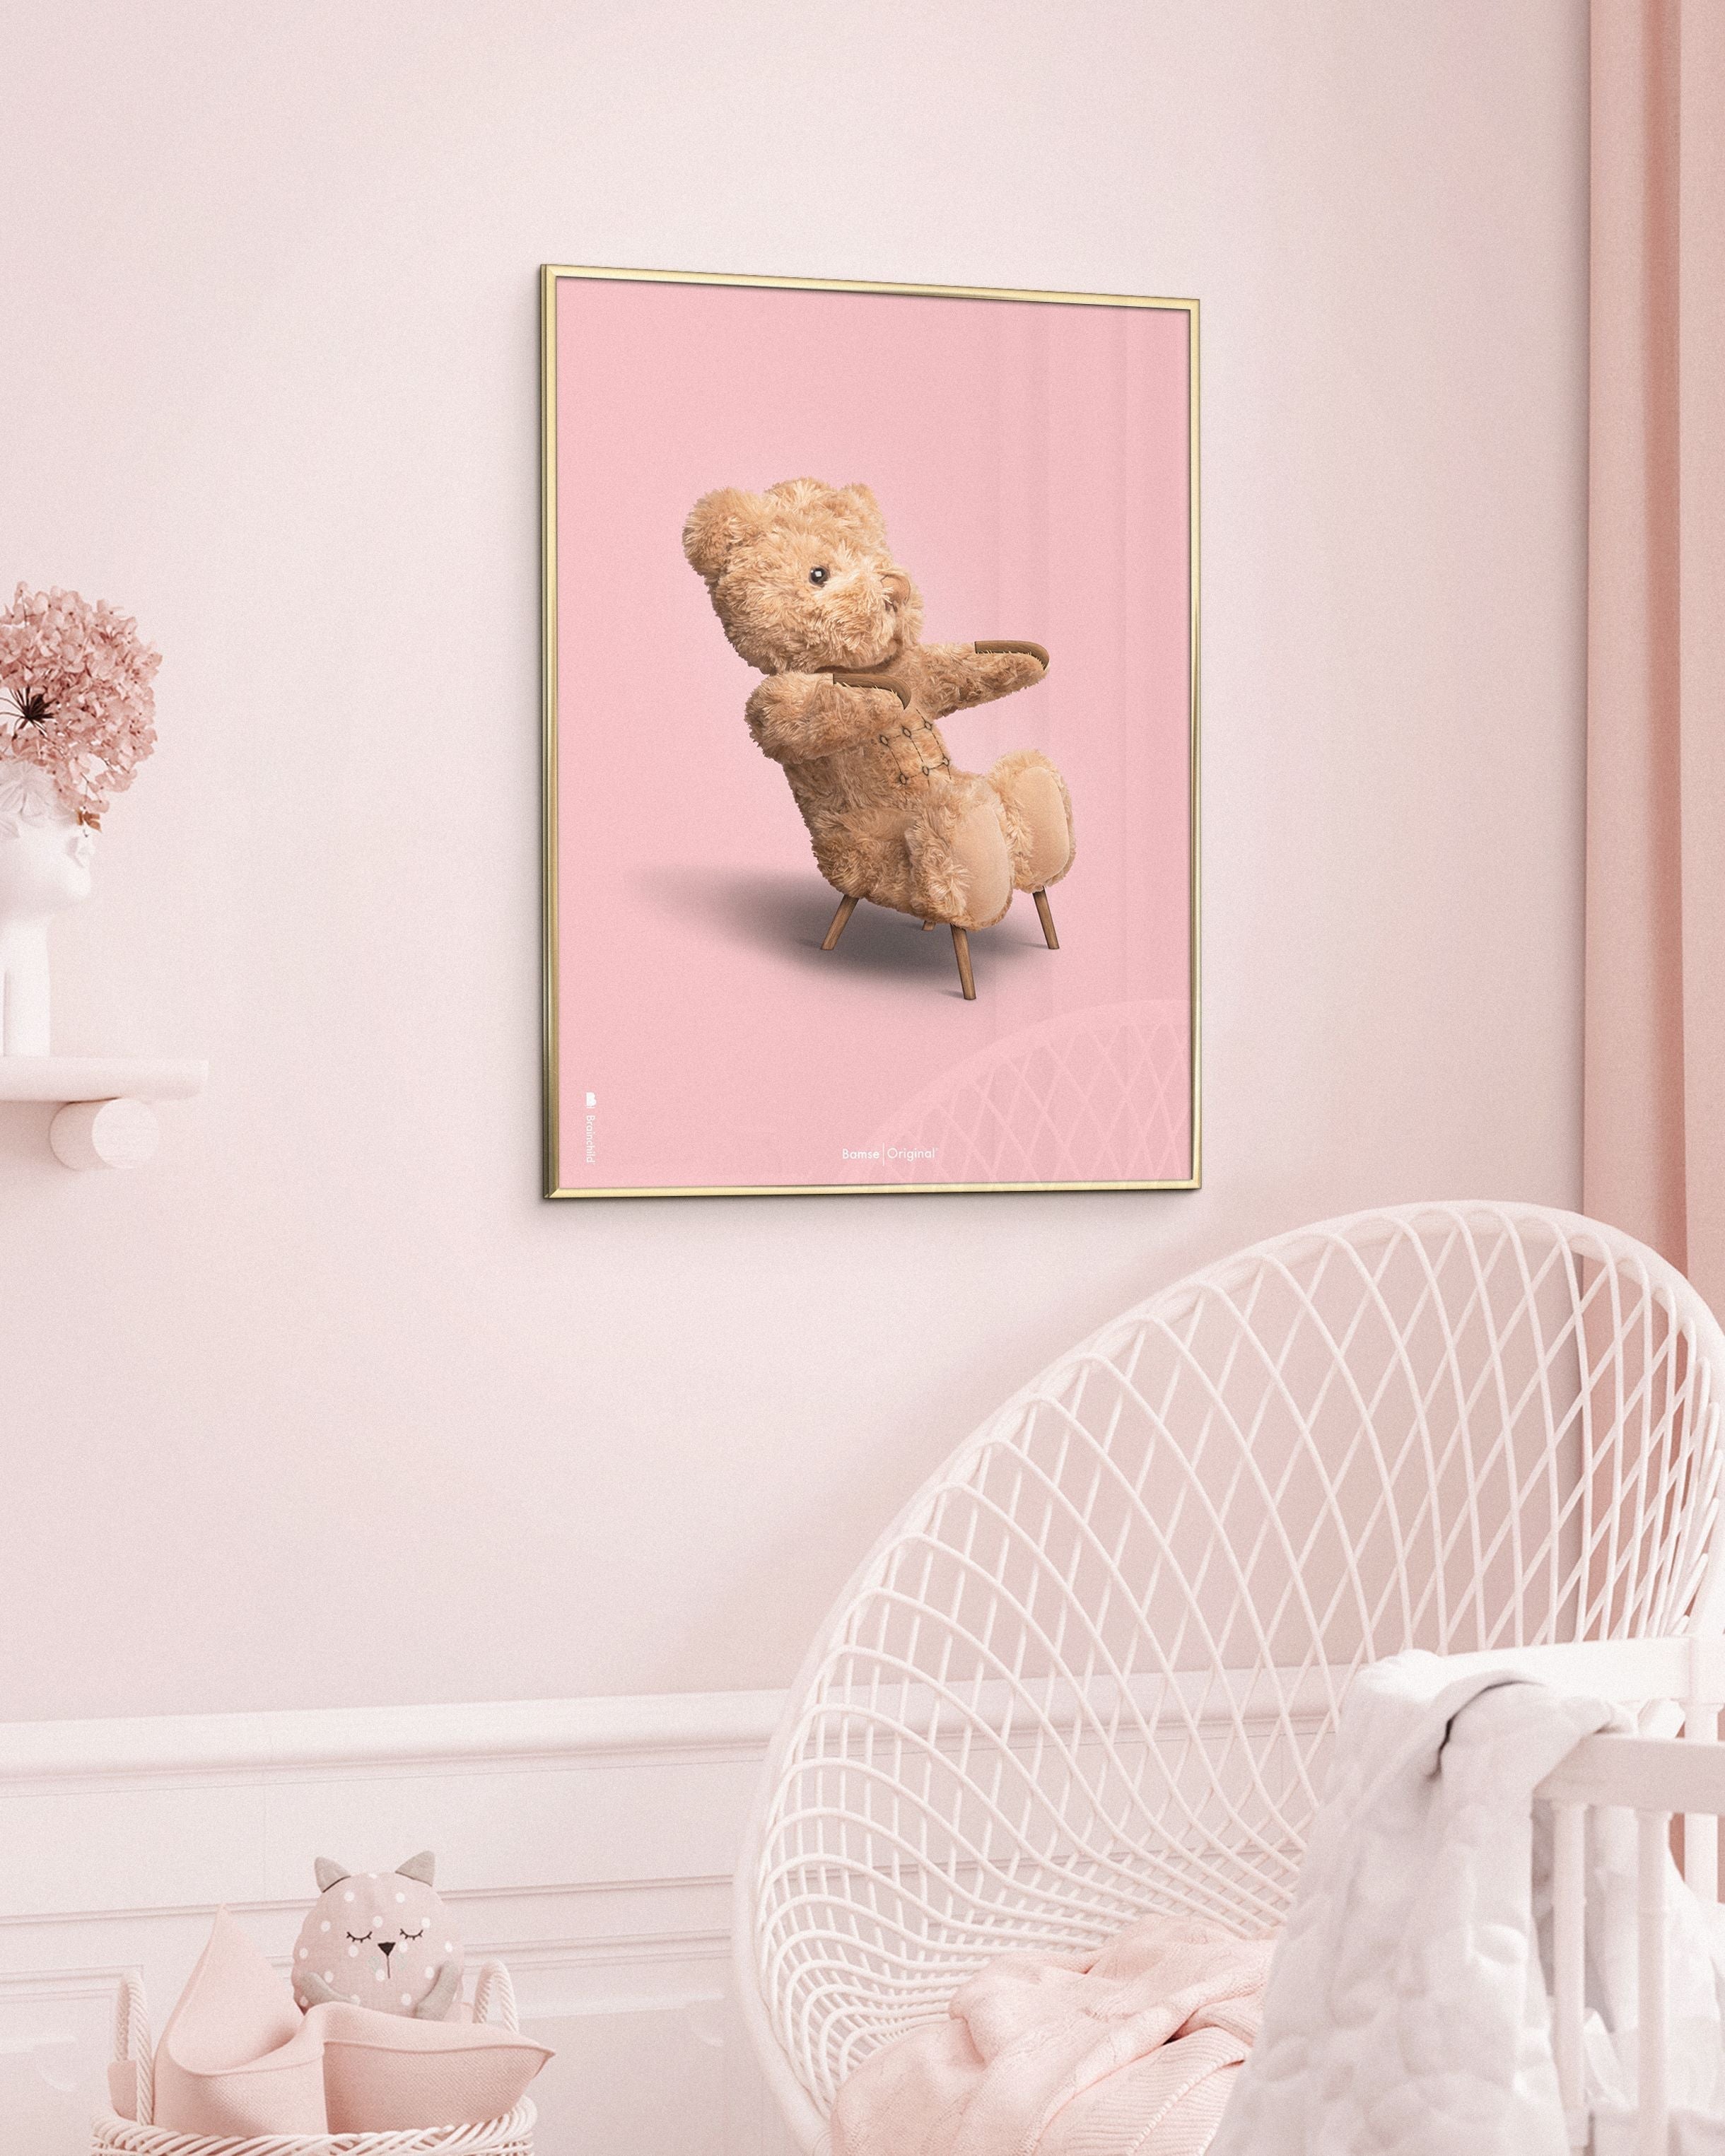 Brainchild Nallebjörn klassisk affischram i mörk träram 50x70 cm, rosa bakgrund